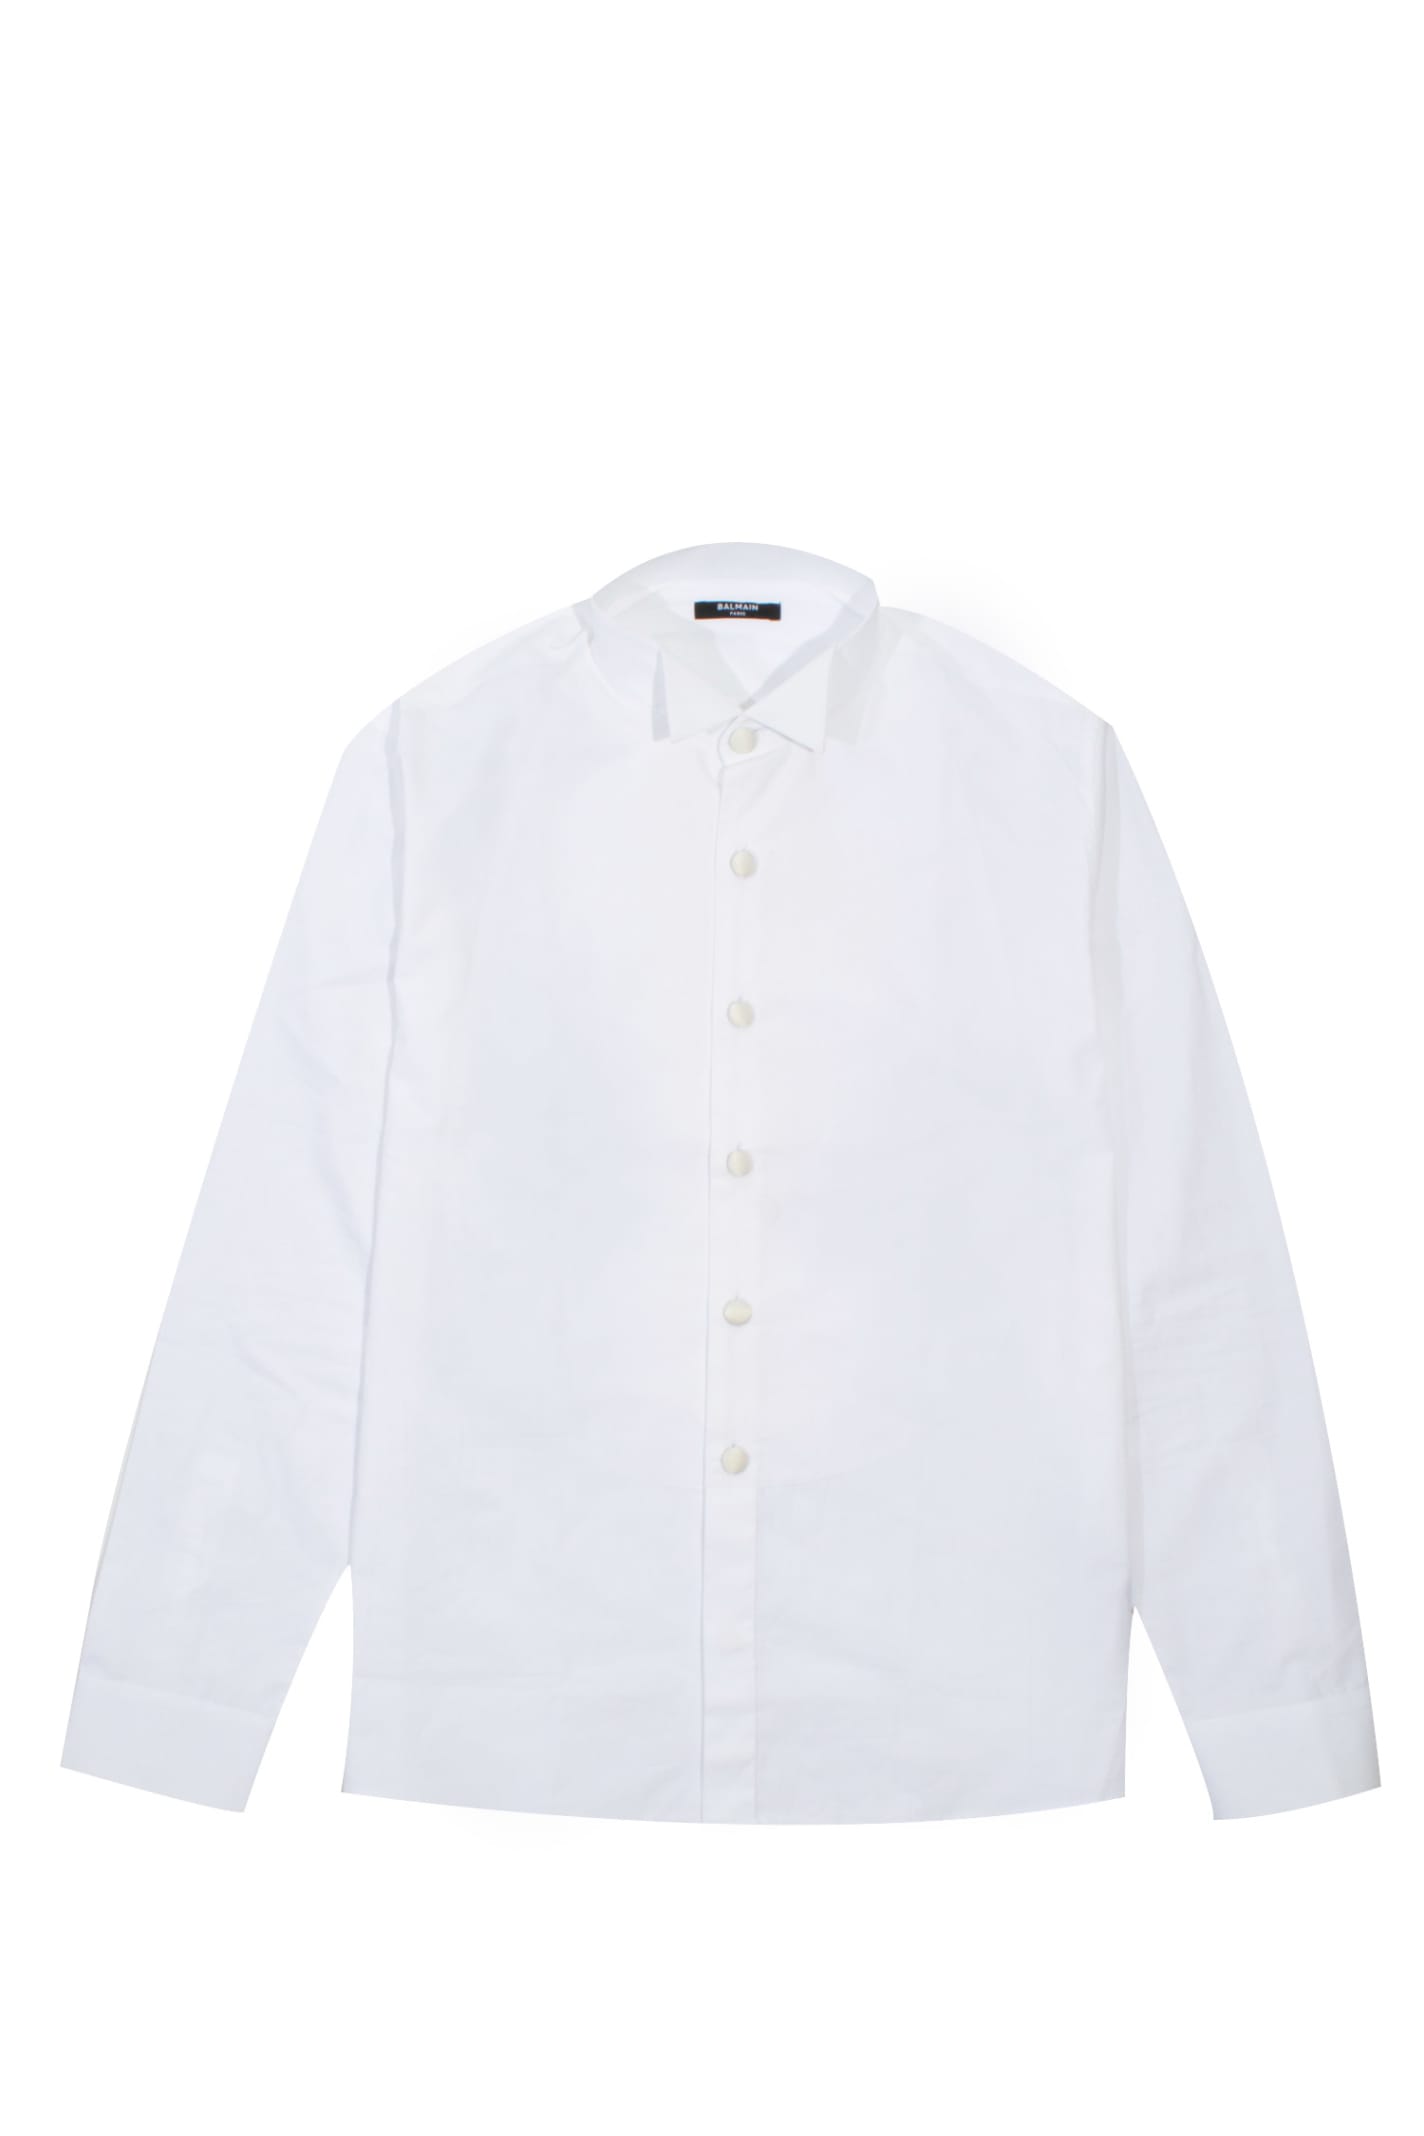 Balmain Cotton Shirt